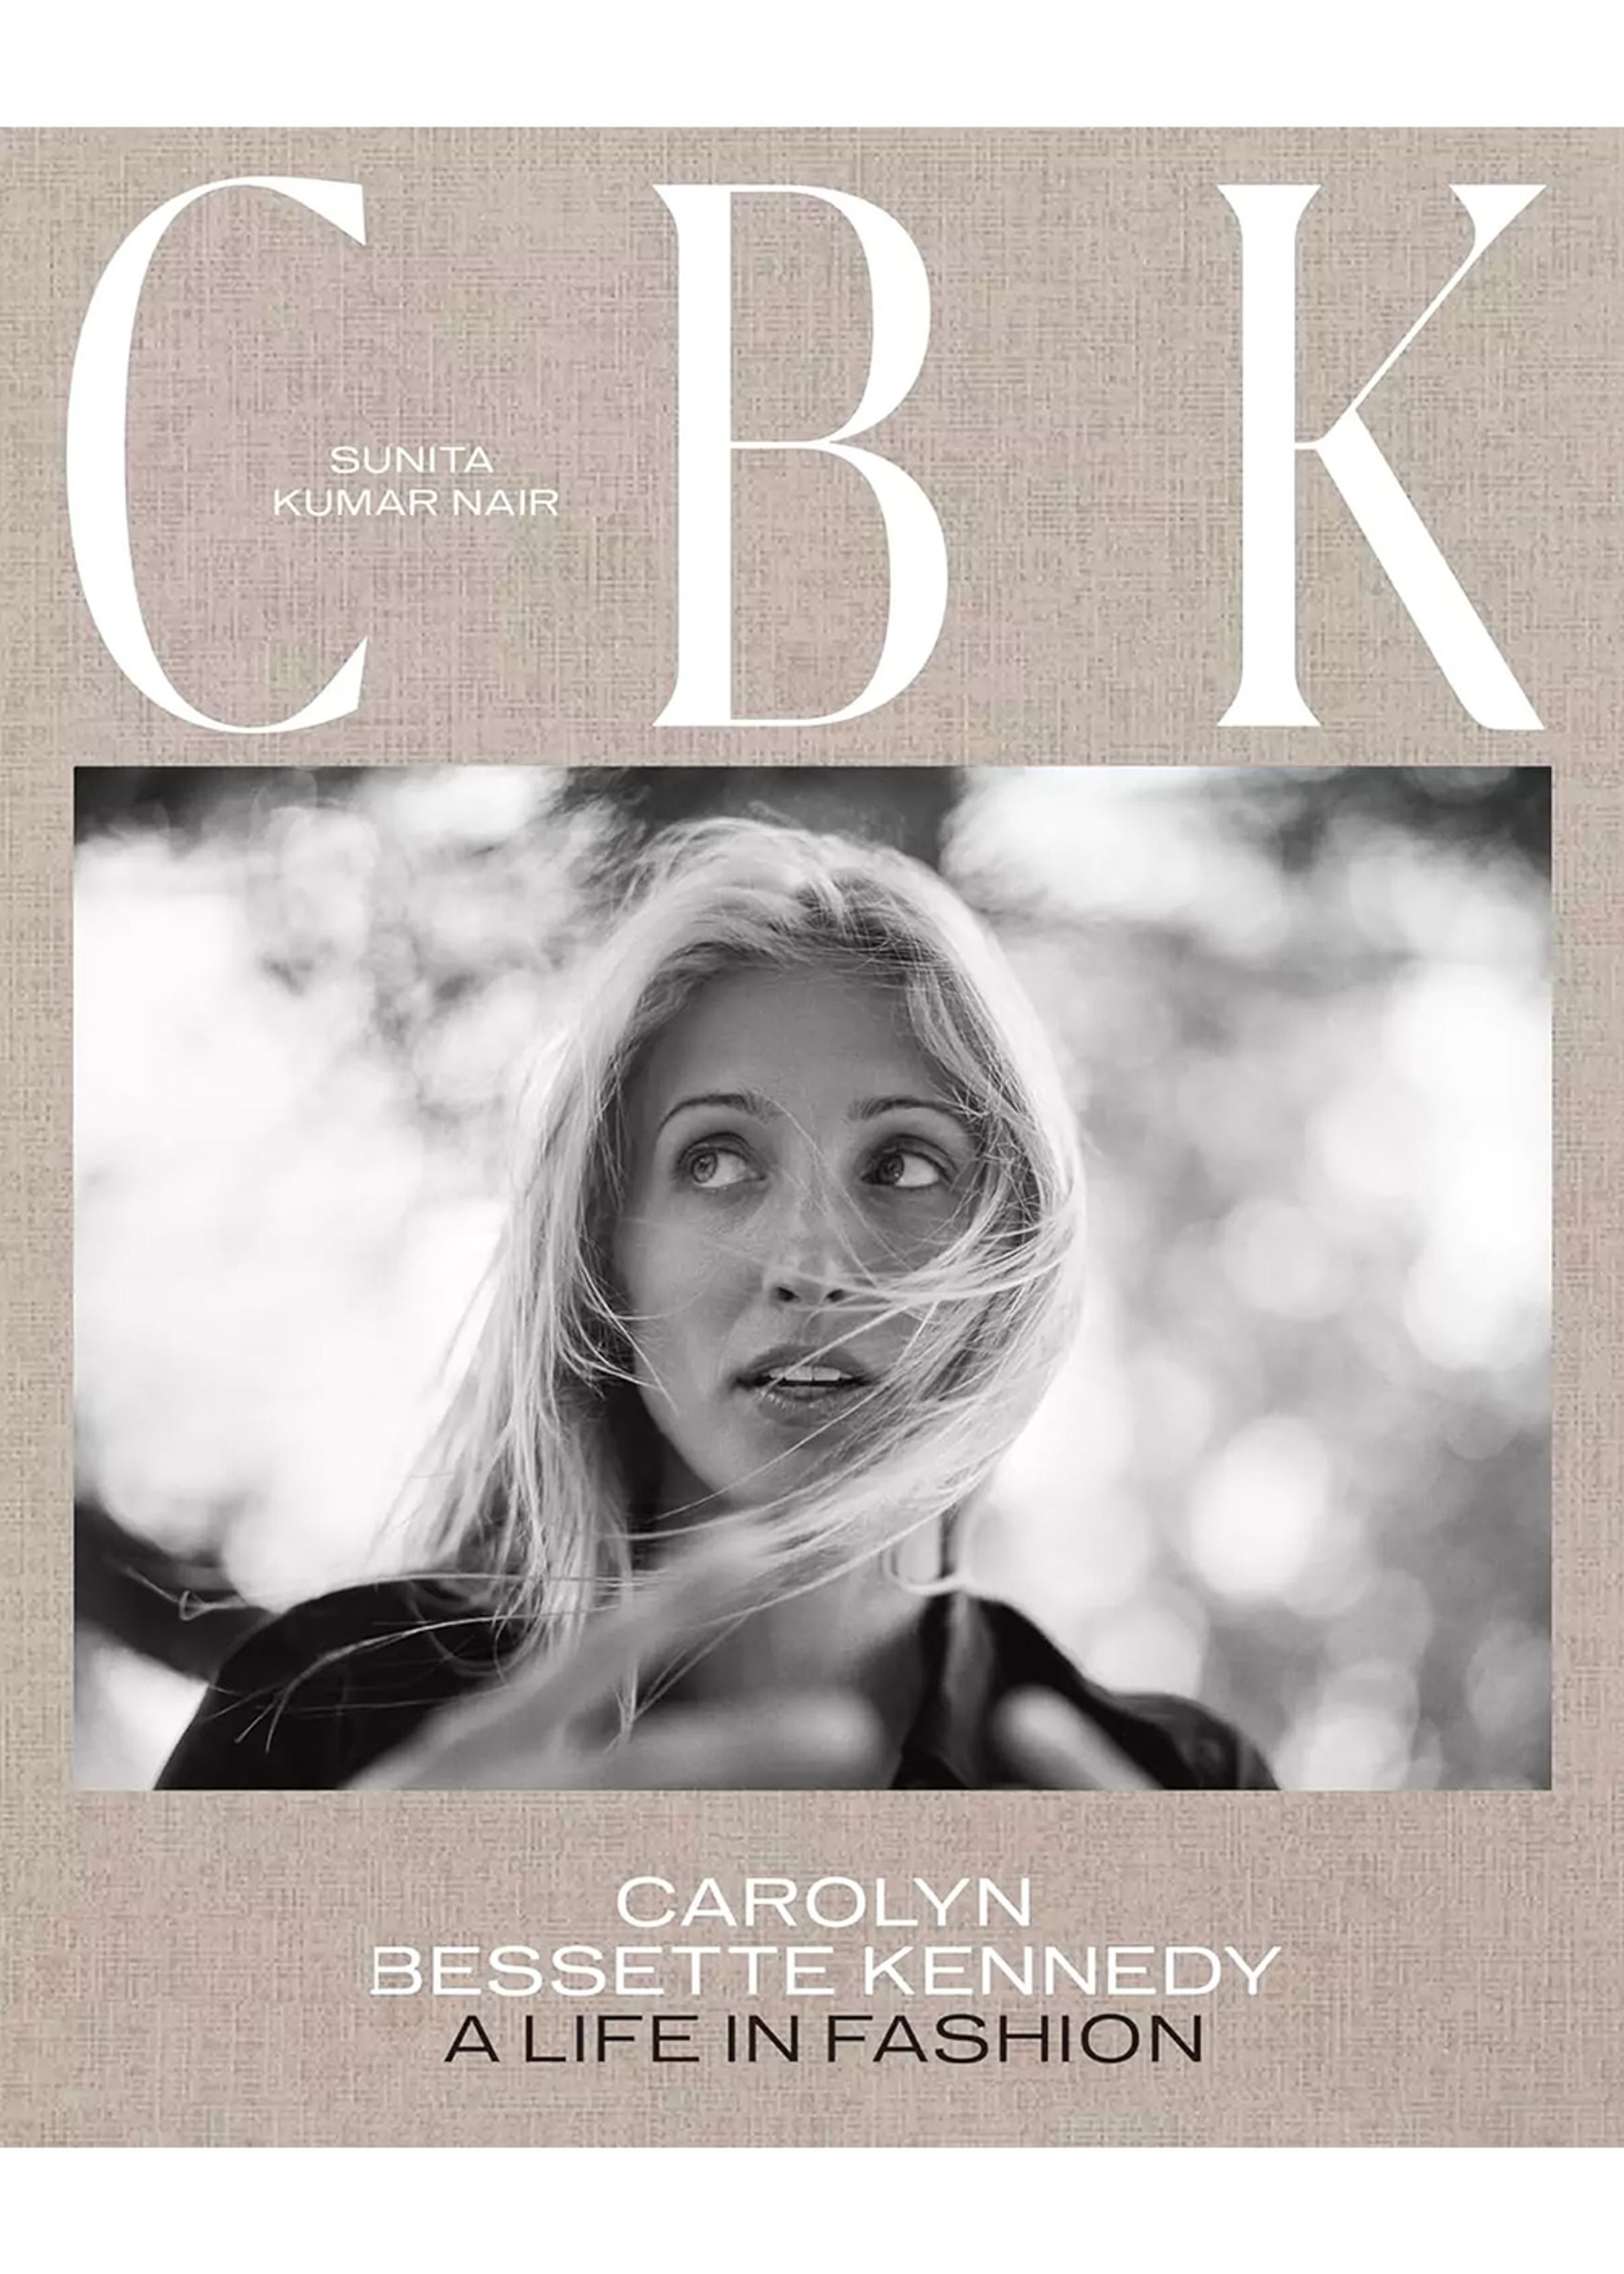 New Mags - Boek - CBK: Carolyn Bessette Kennedy - A Life in Fashion  - Sunita K. Nair